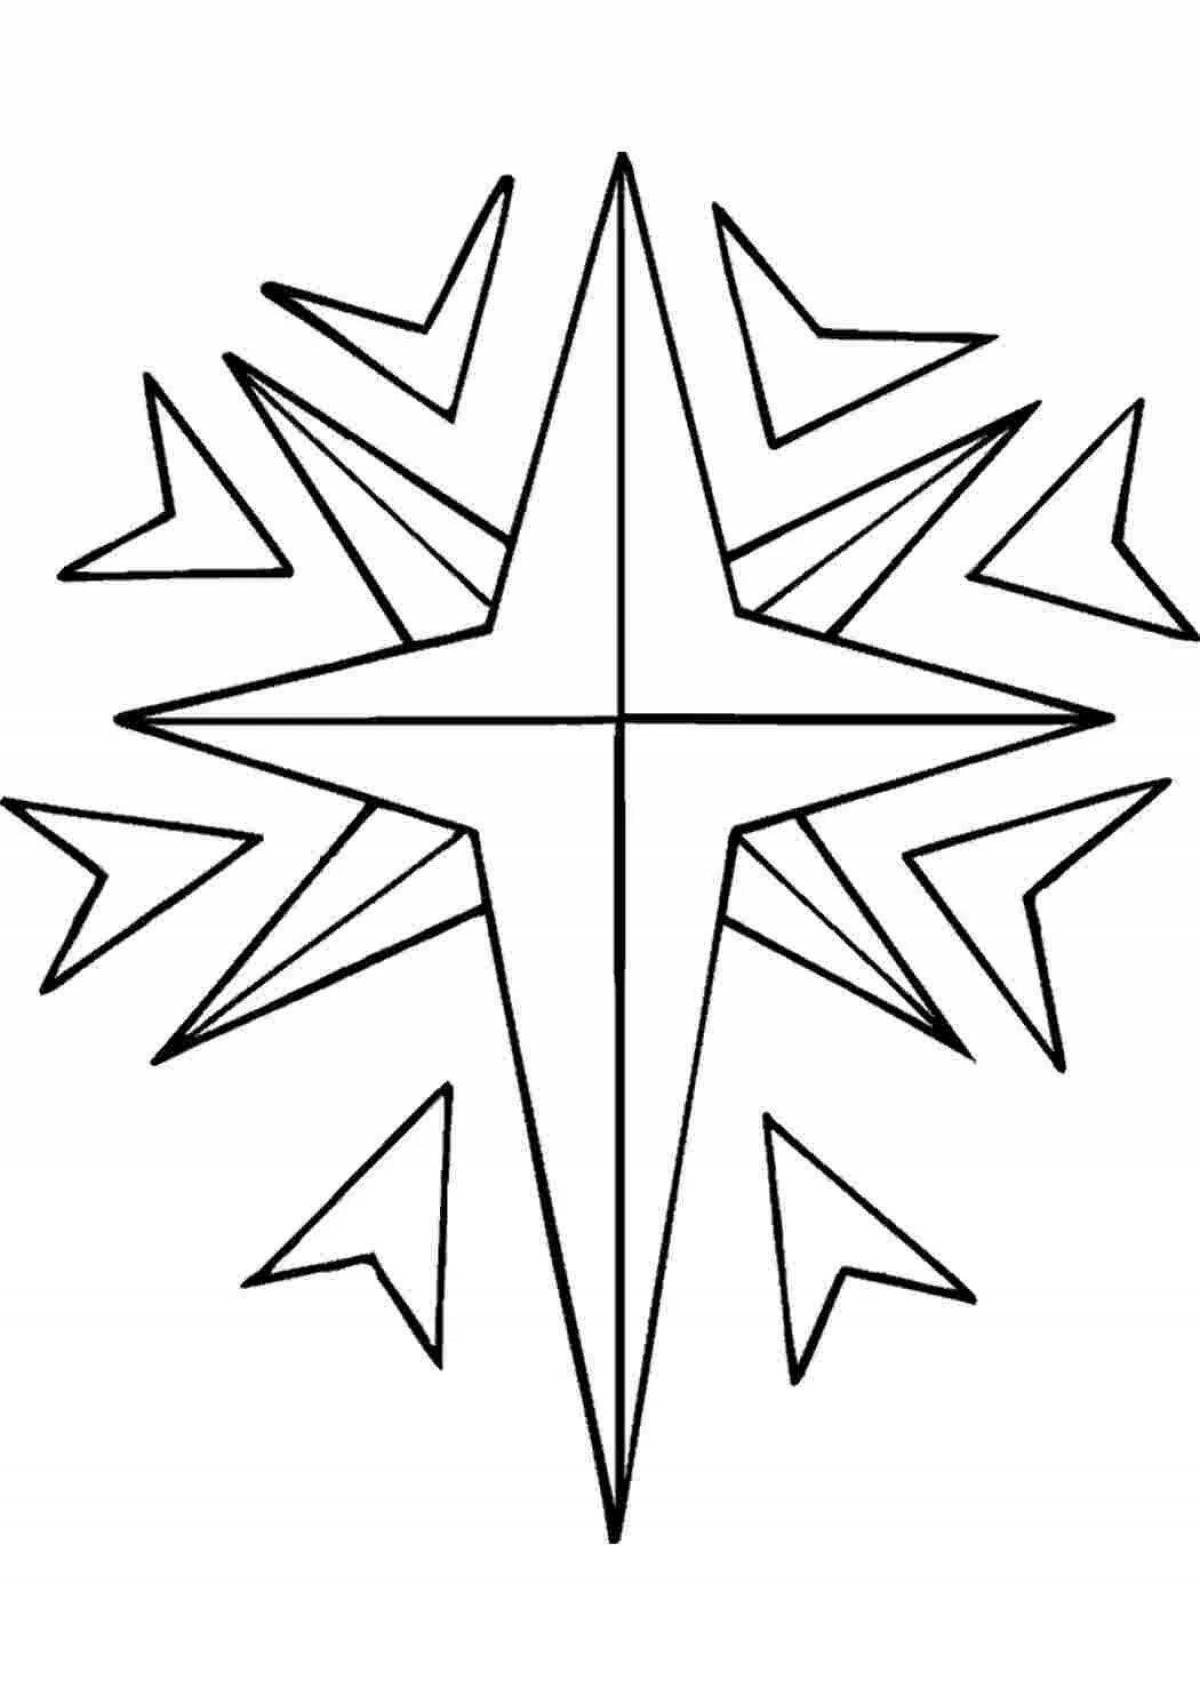 Star of Bethlehem #12